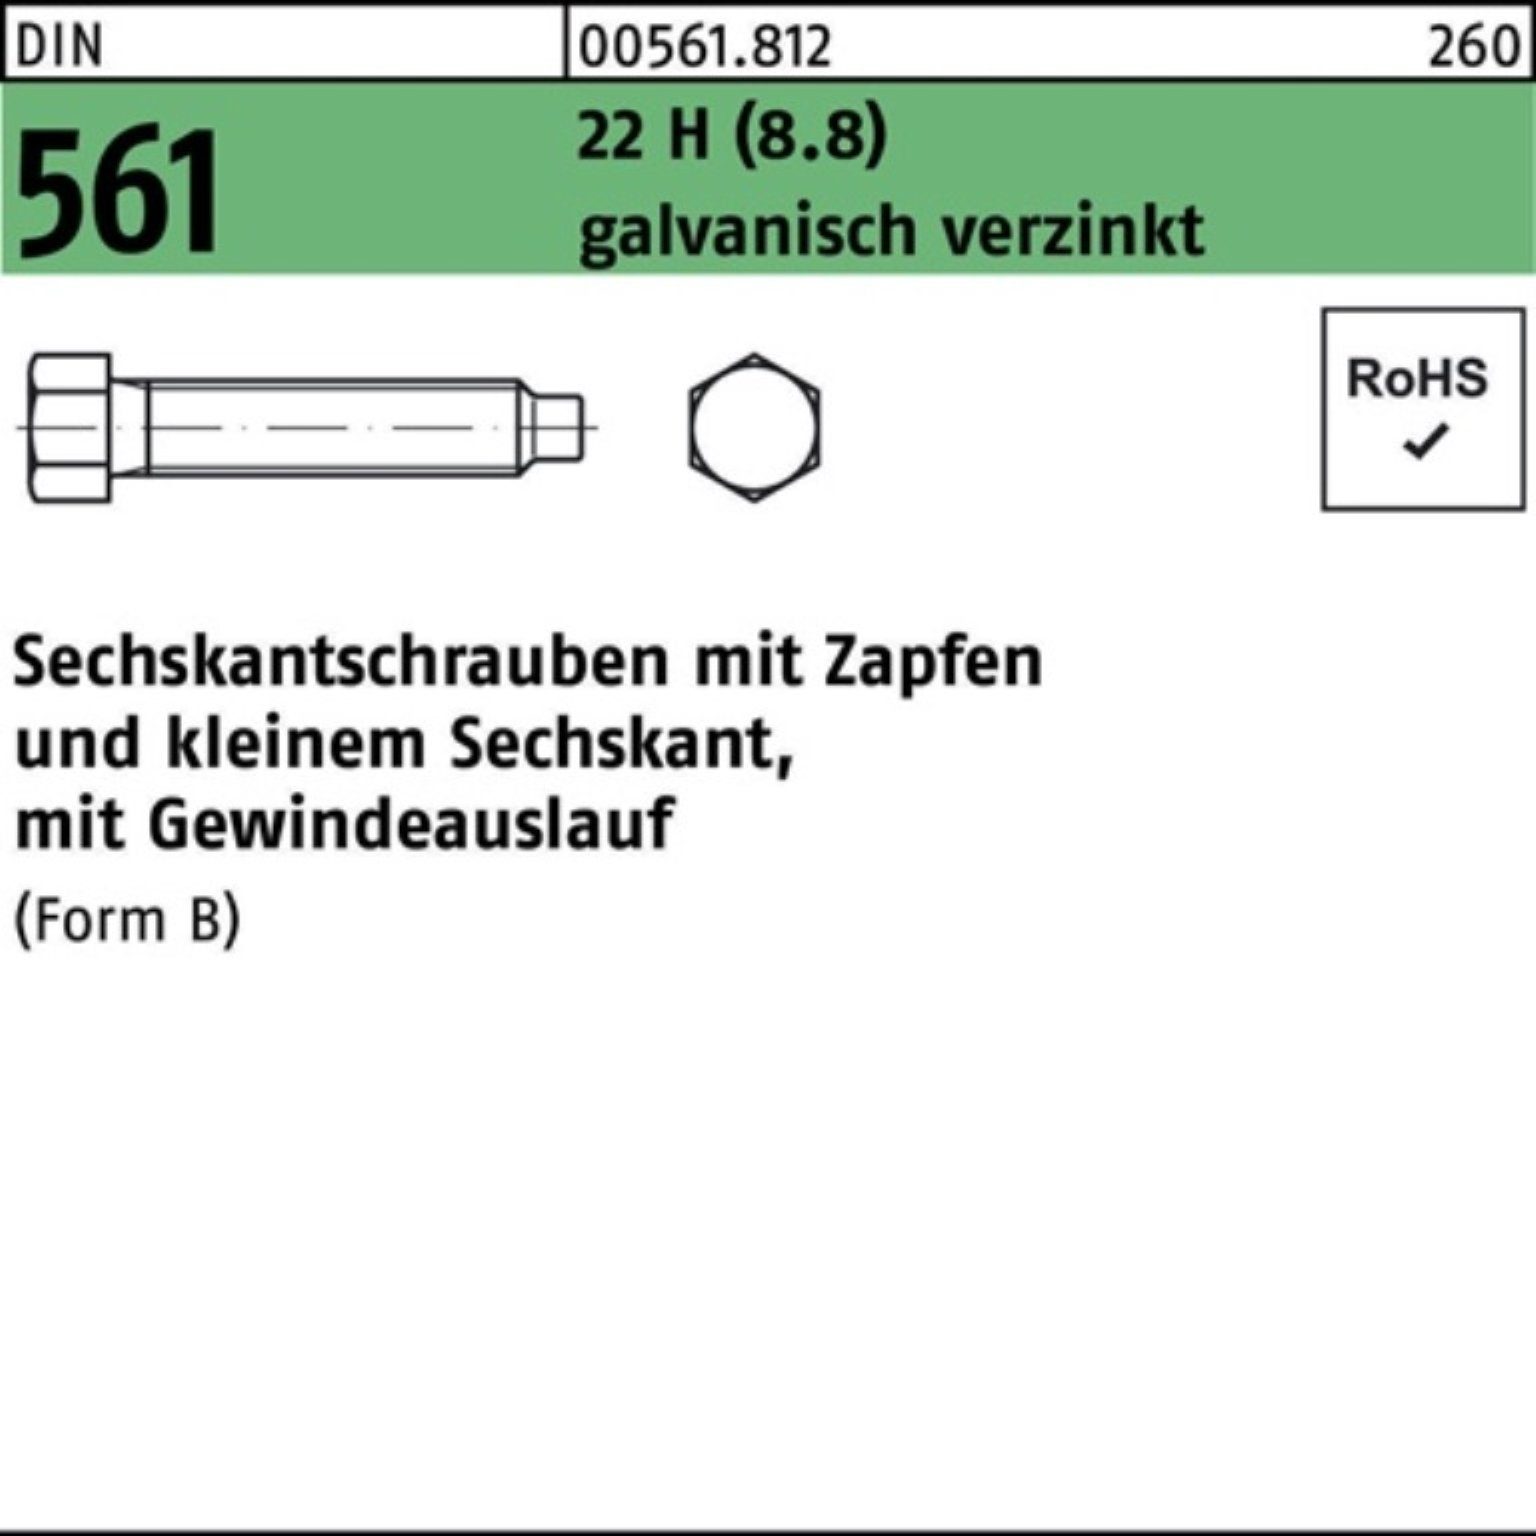 561 BM Sechskantschraube Reyher H galv.ve 22 Zapfen Sechskantschraube 6x20 (8.8) 100er Pack DIN